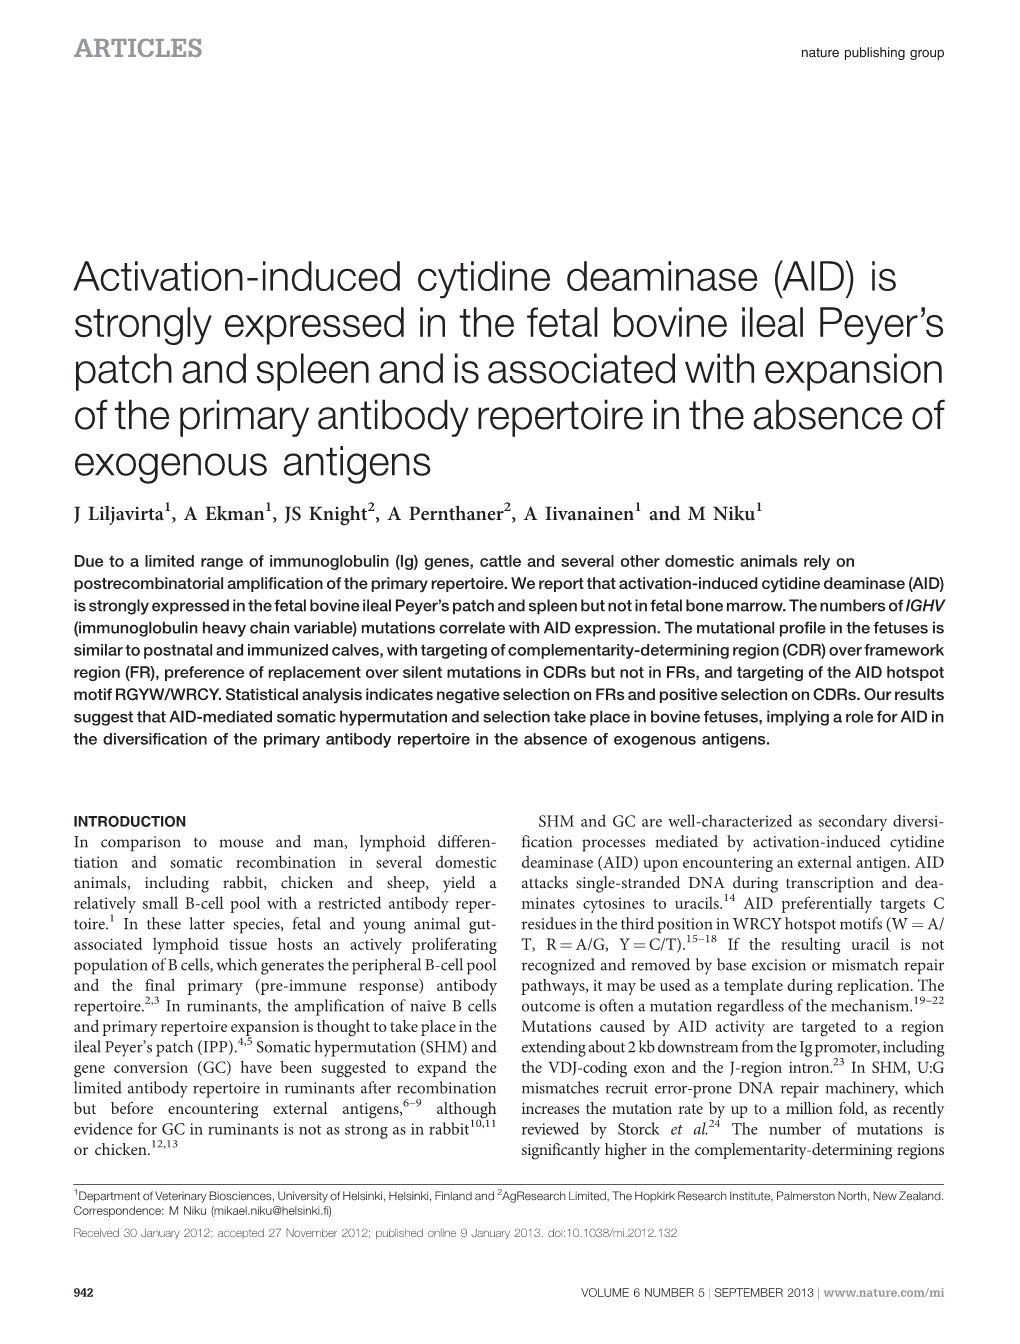 Activation-Induced Cytidine Deaminase (AID) Is